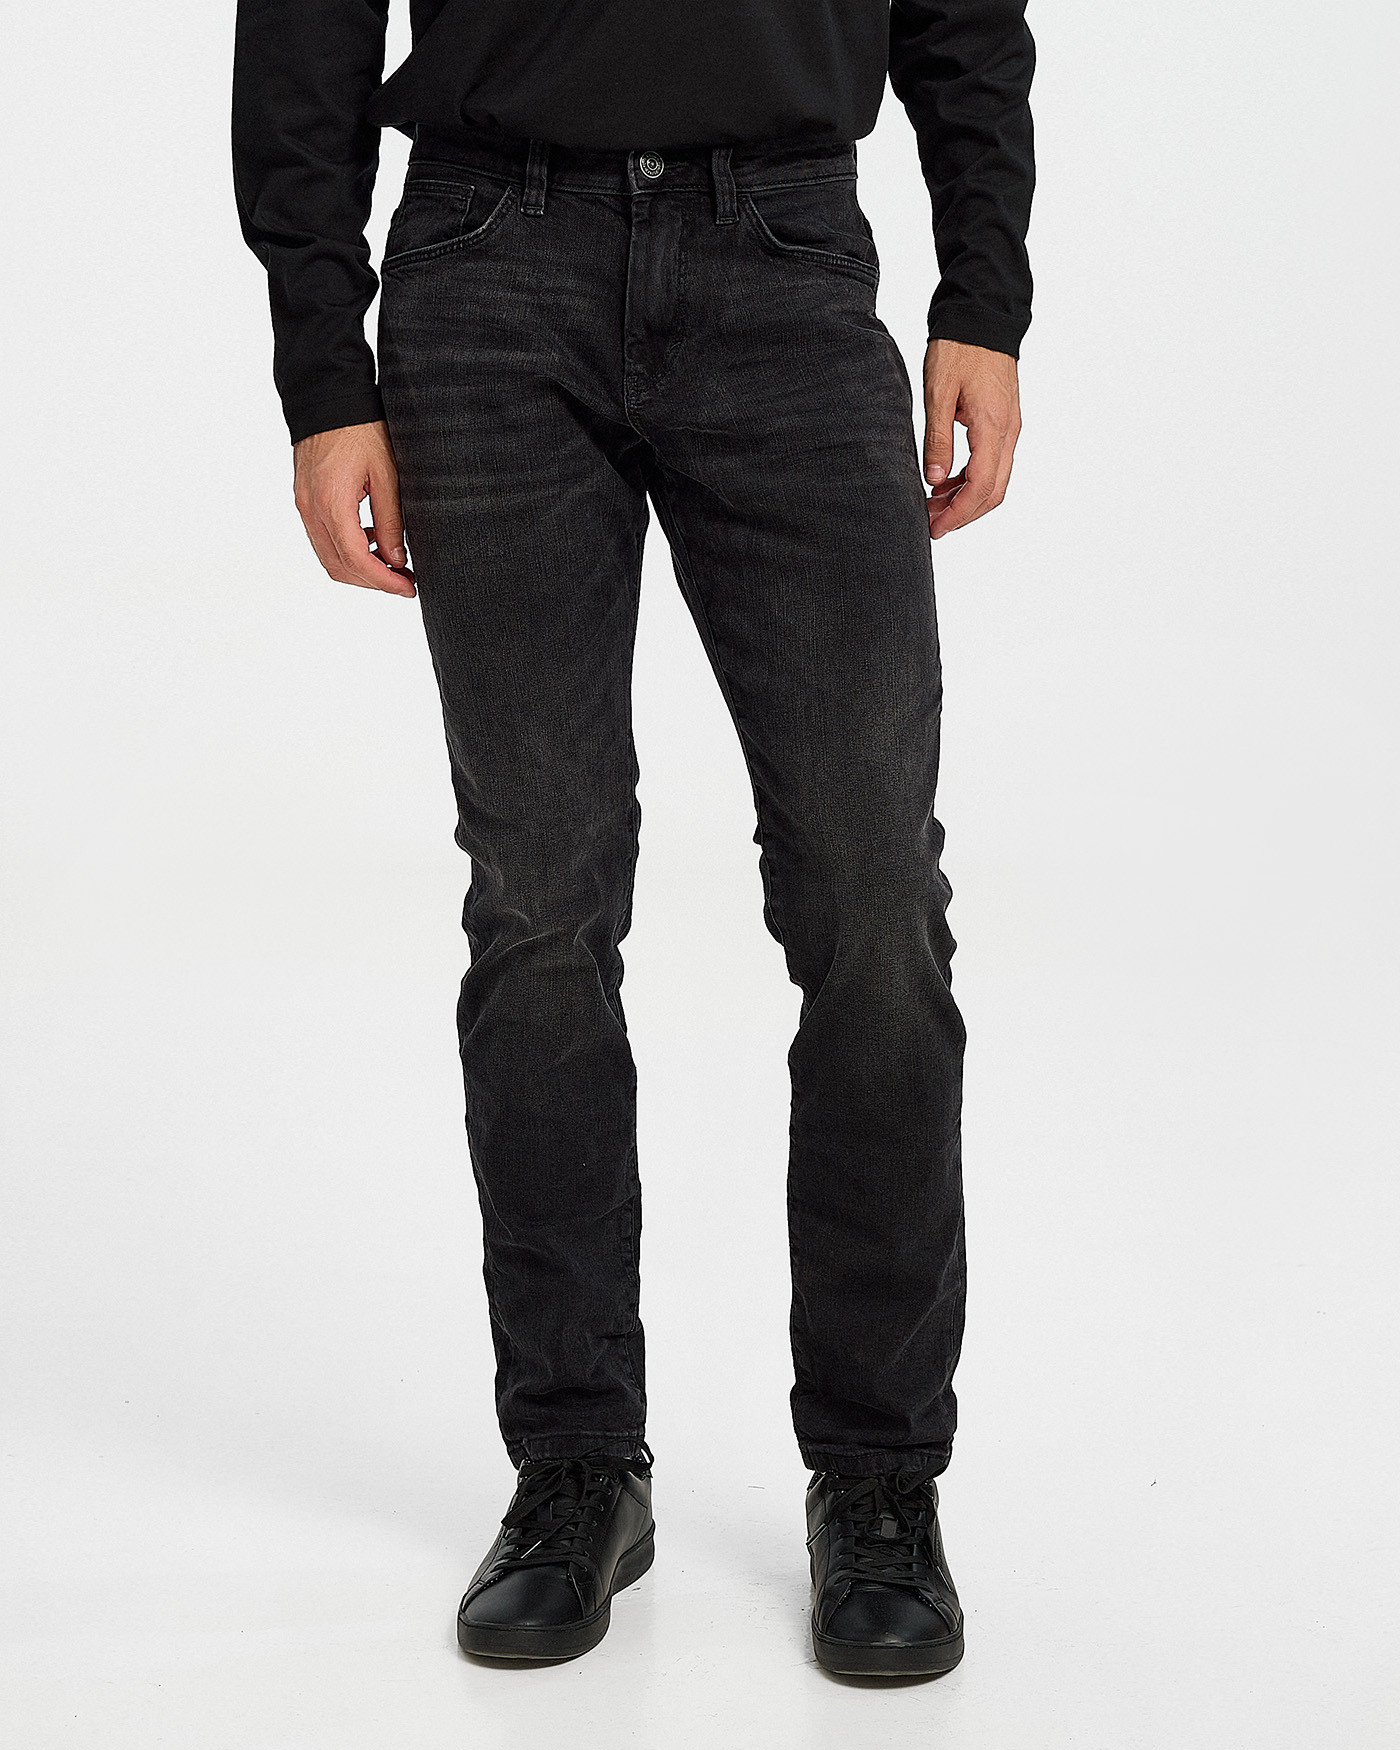 TOM TAILOR Men's Jeans W31 L34 Model Slim Aedan 31-34 great condition | eBay